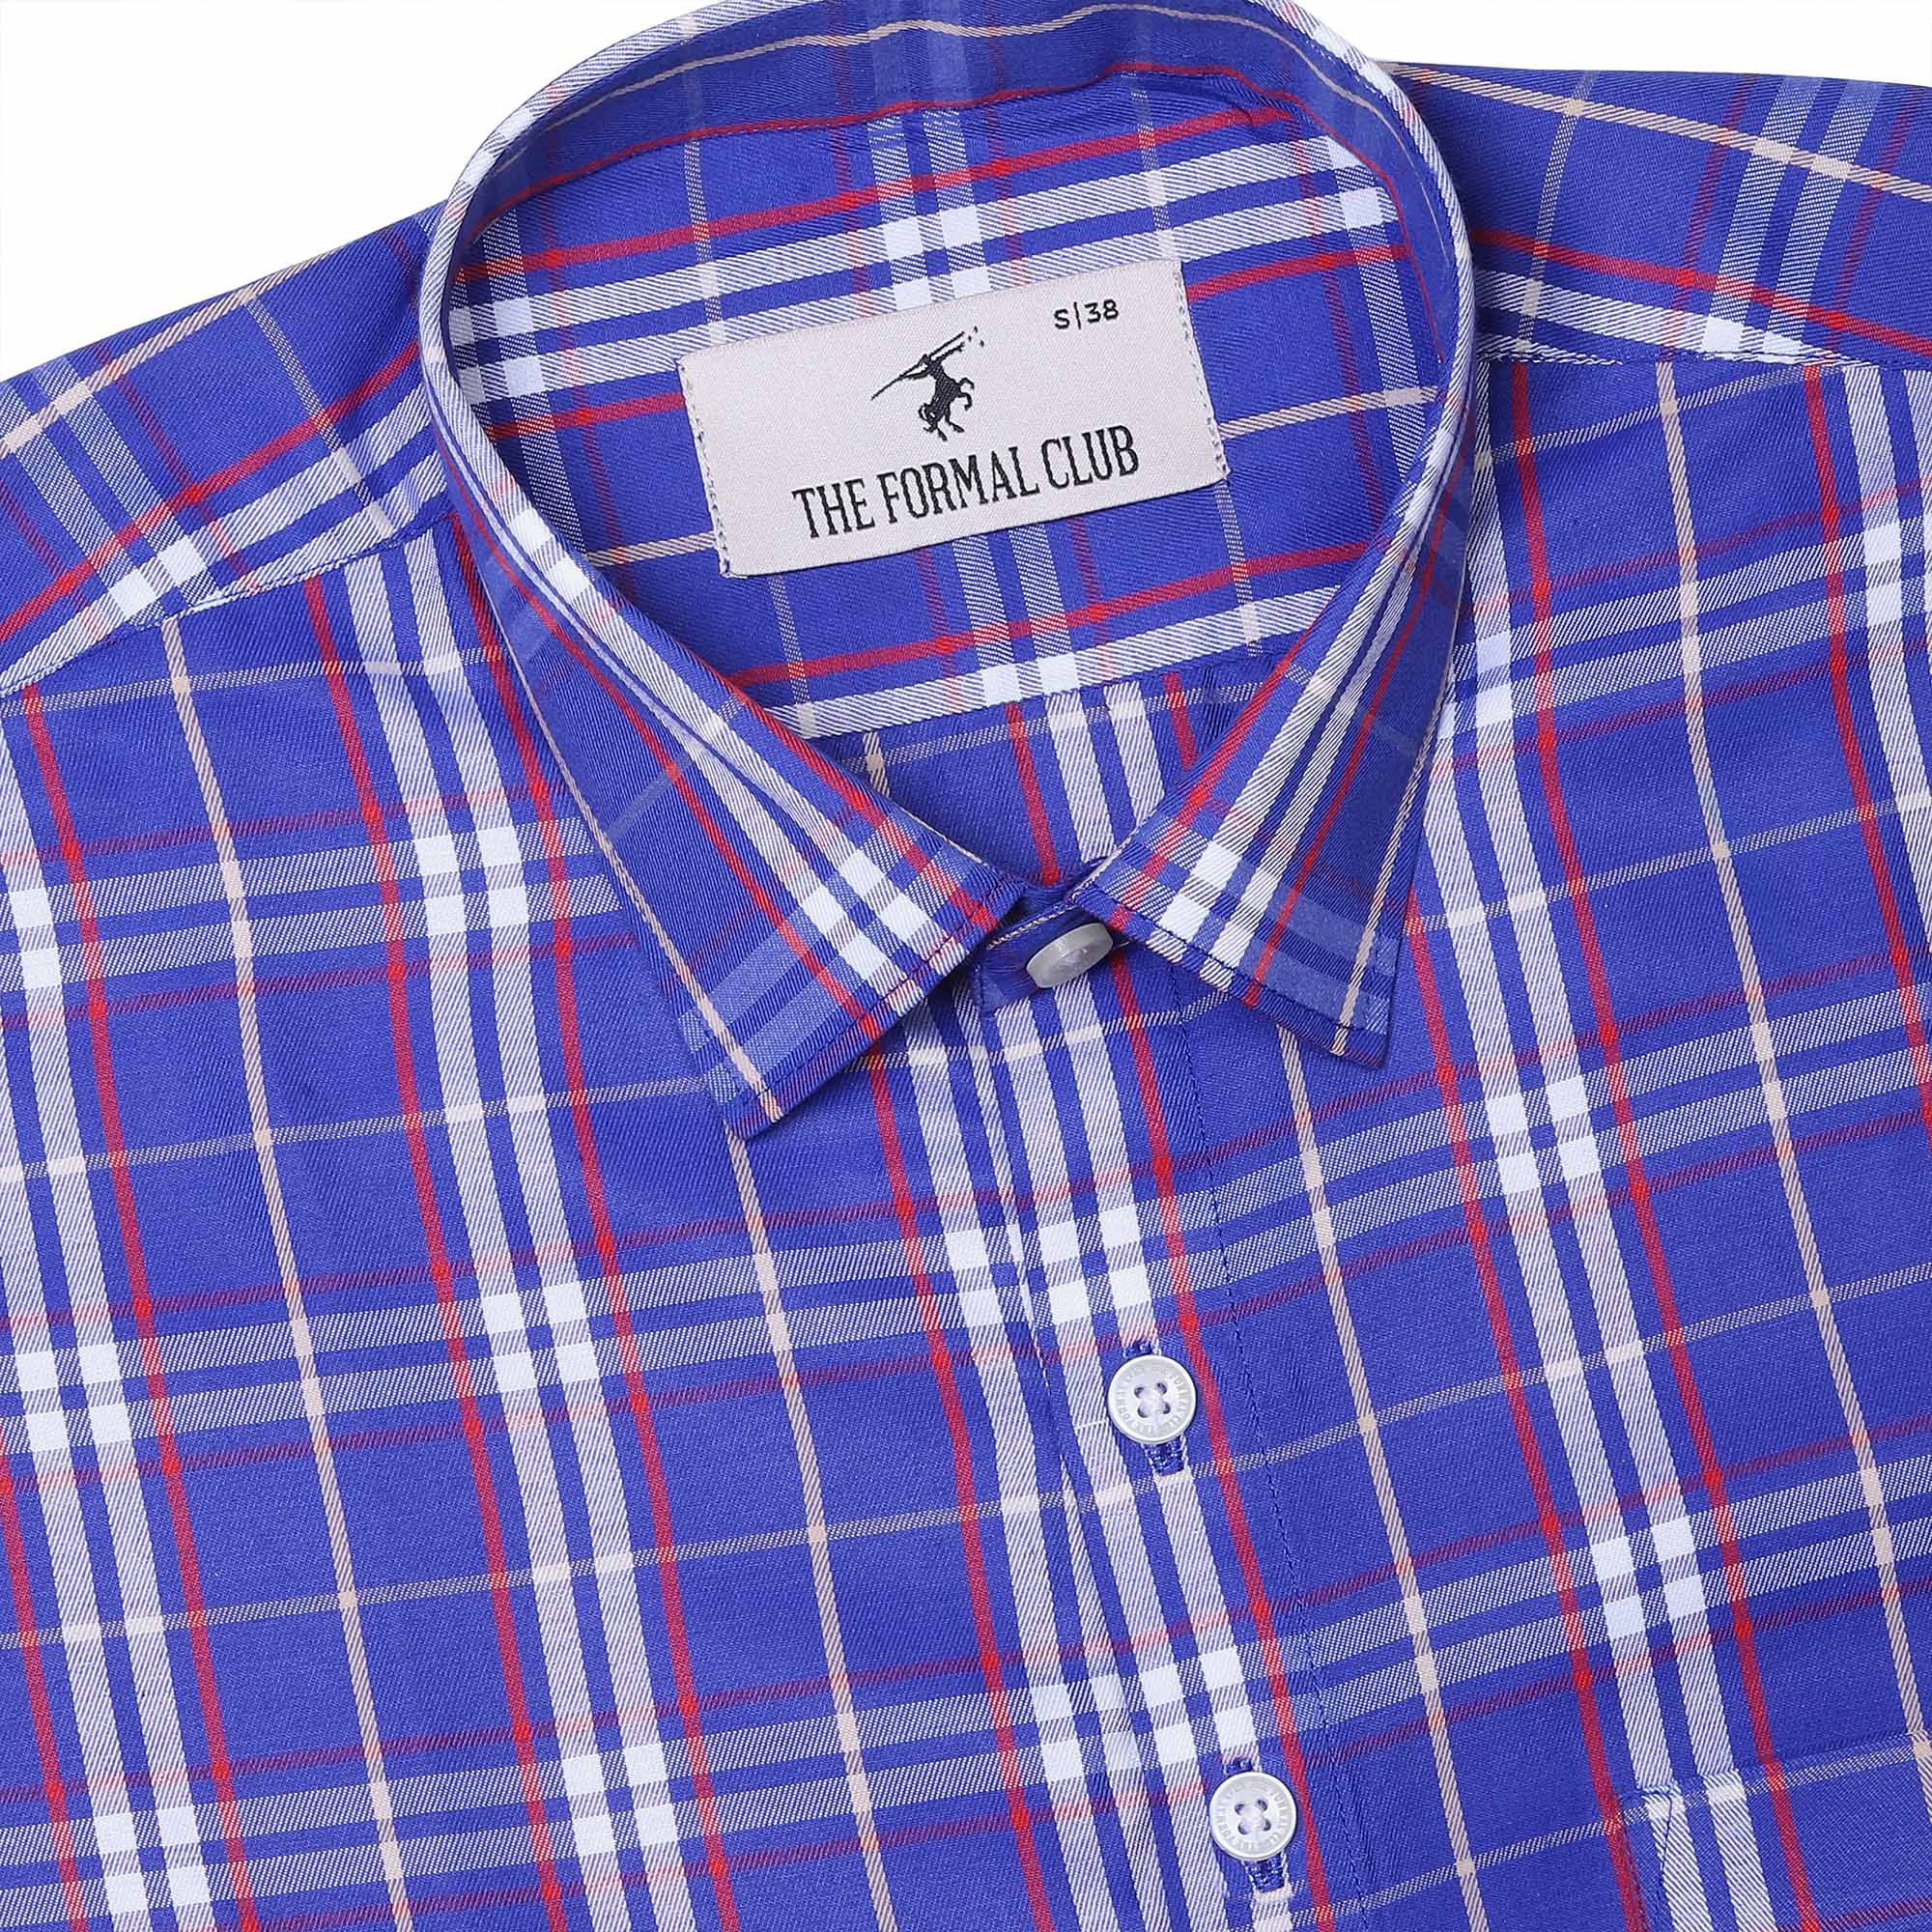 Vento Twill Check Shirt in Royal Blue - The Formal Club